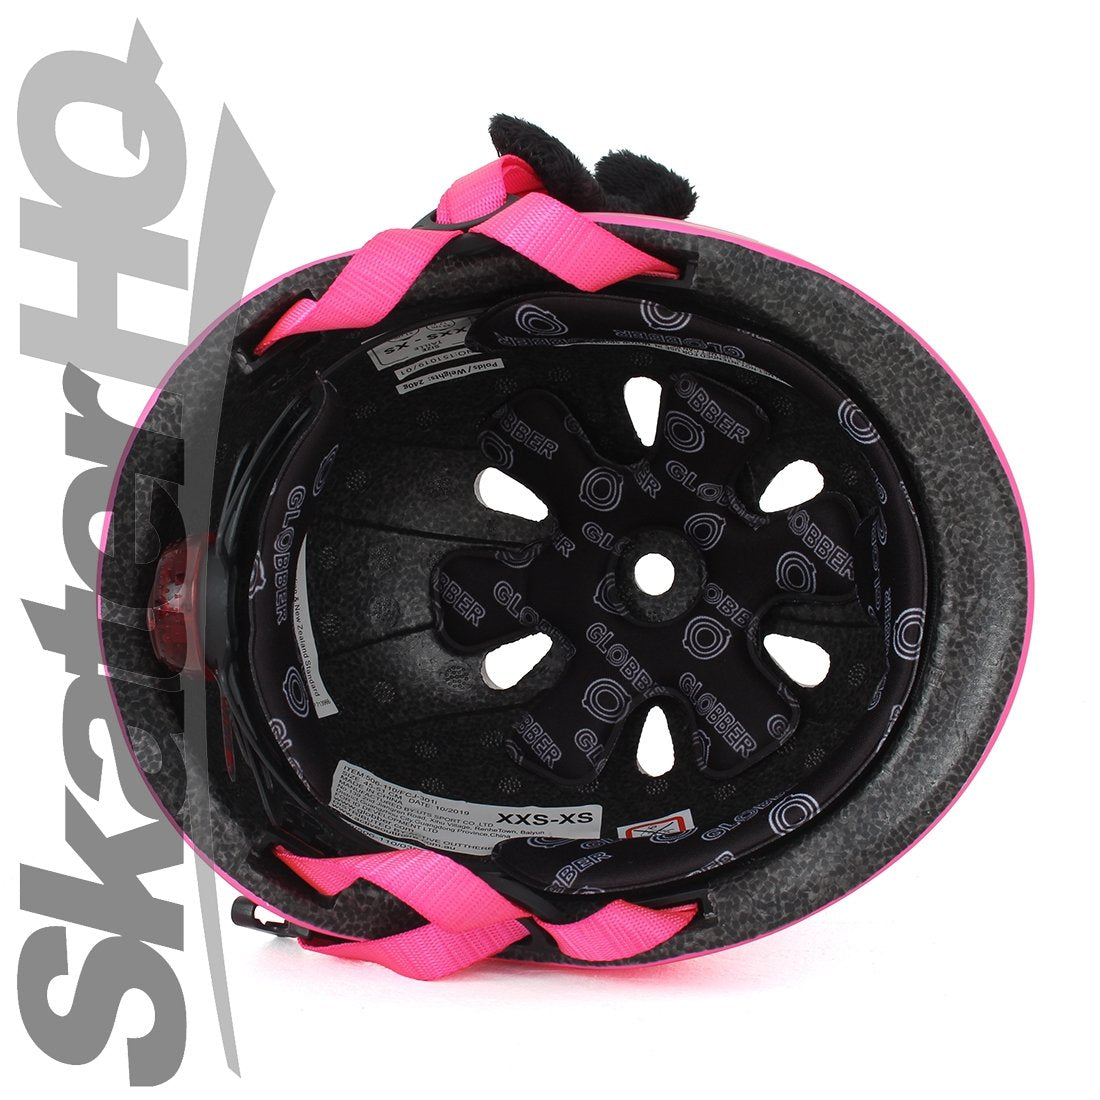 Globber LED Kids Helmet - Deep Pink - XS/S Helmets